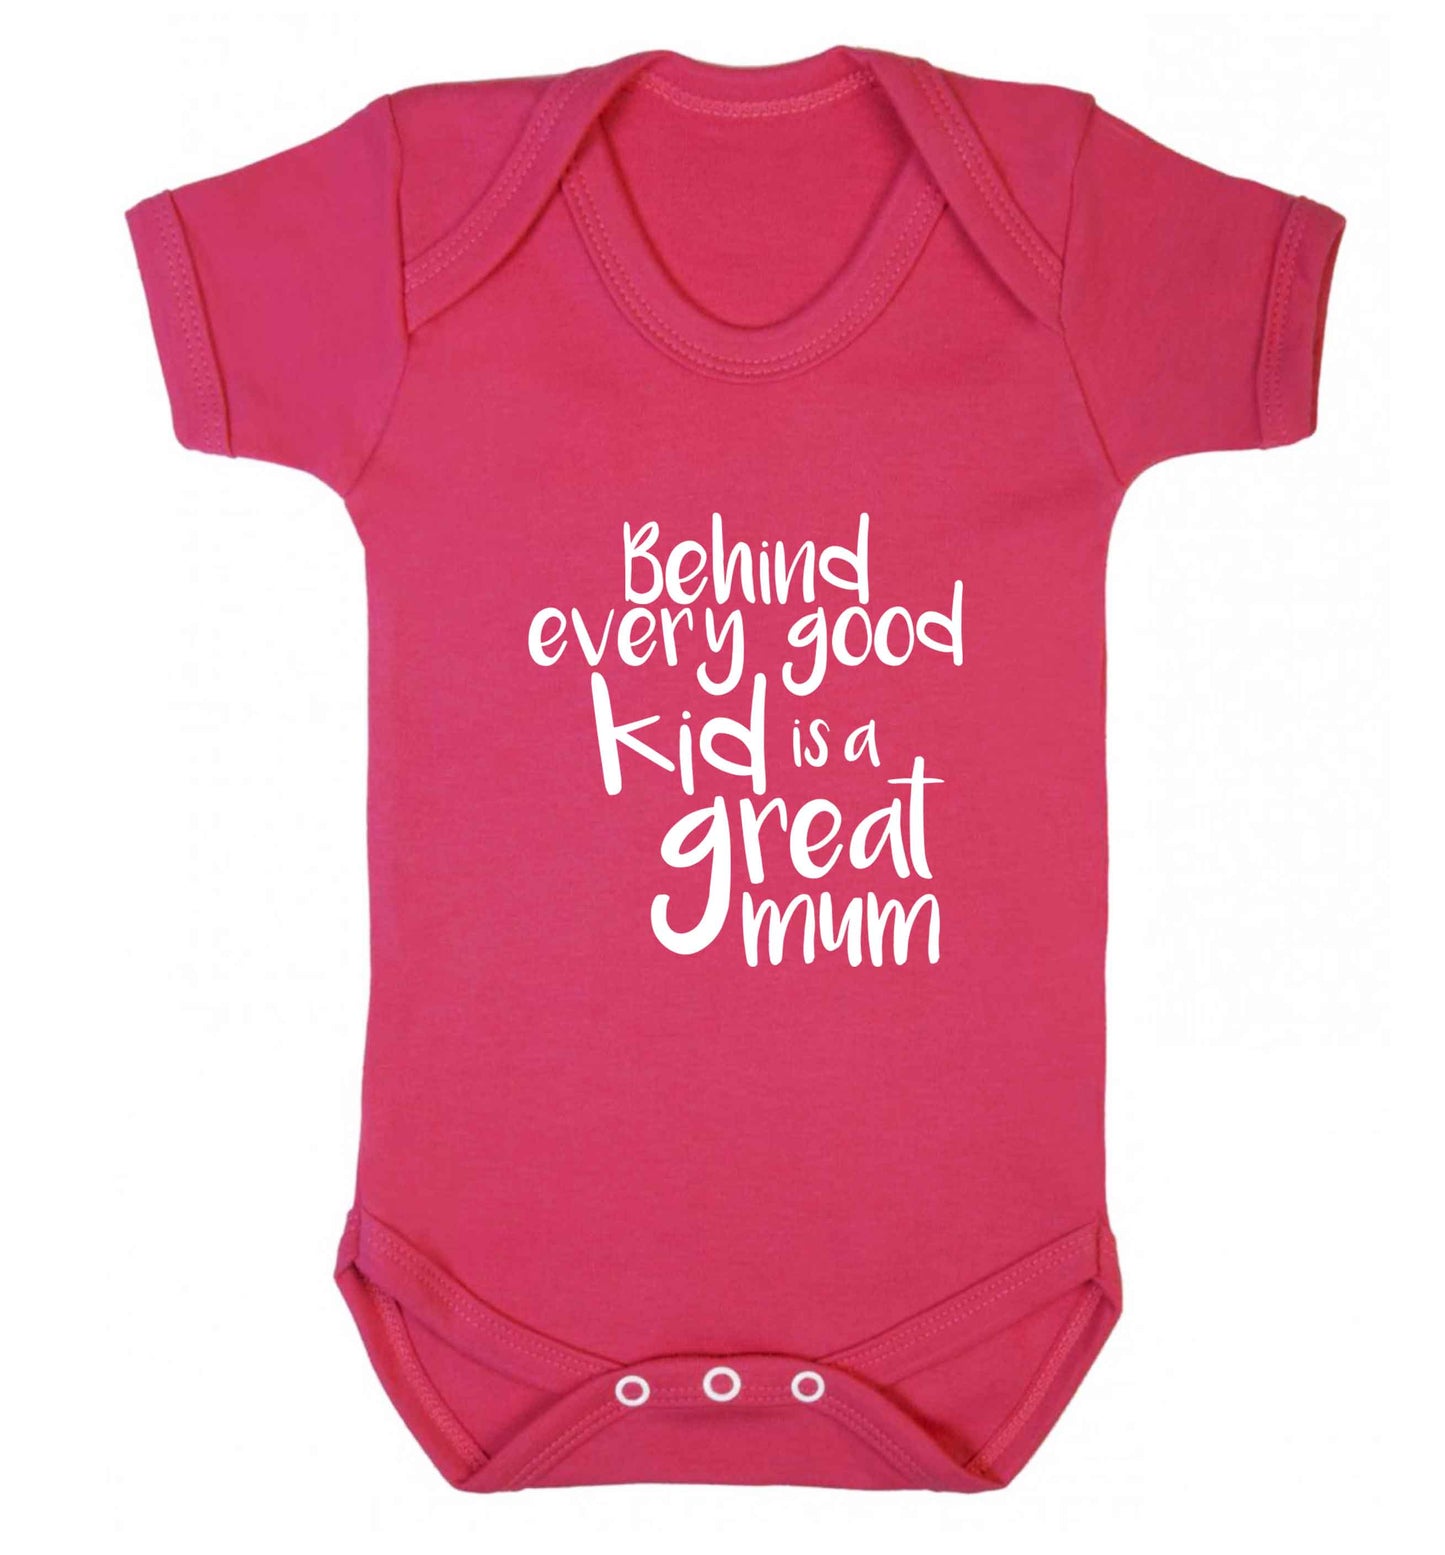 Behind every good kid is a great mum baby vest dark pink 18-24 months